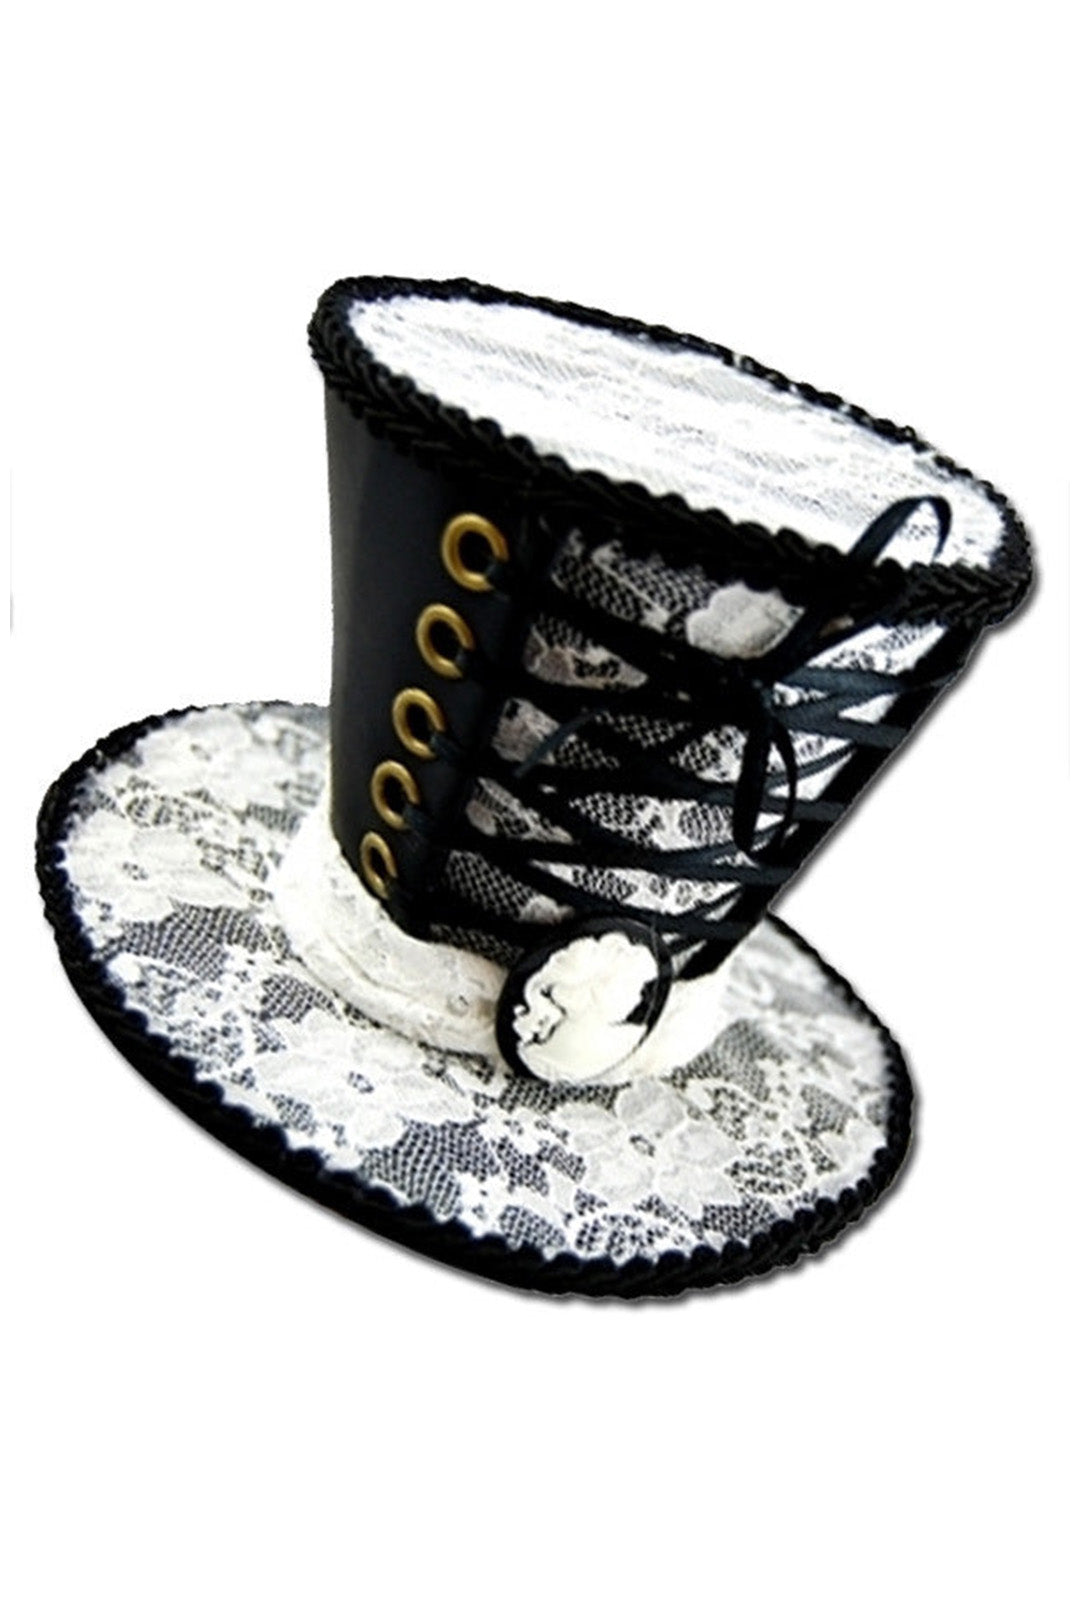 Black & White Mini Top Hat Hair Clip